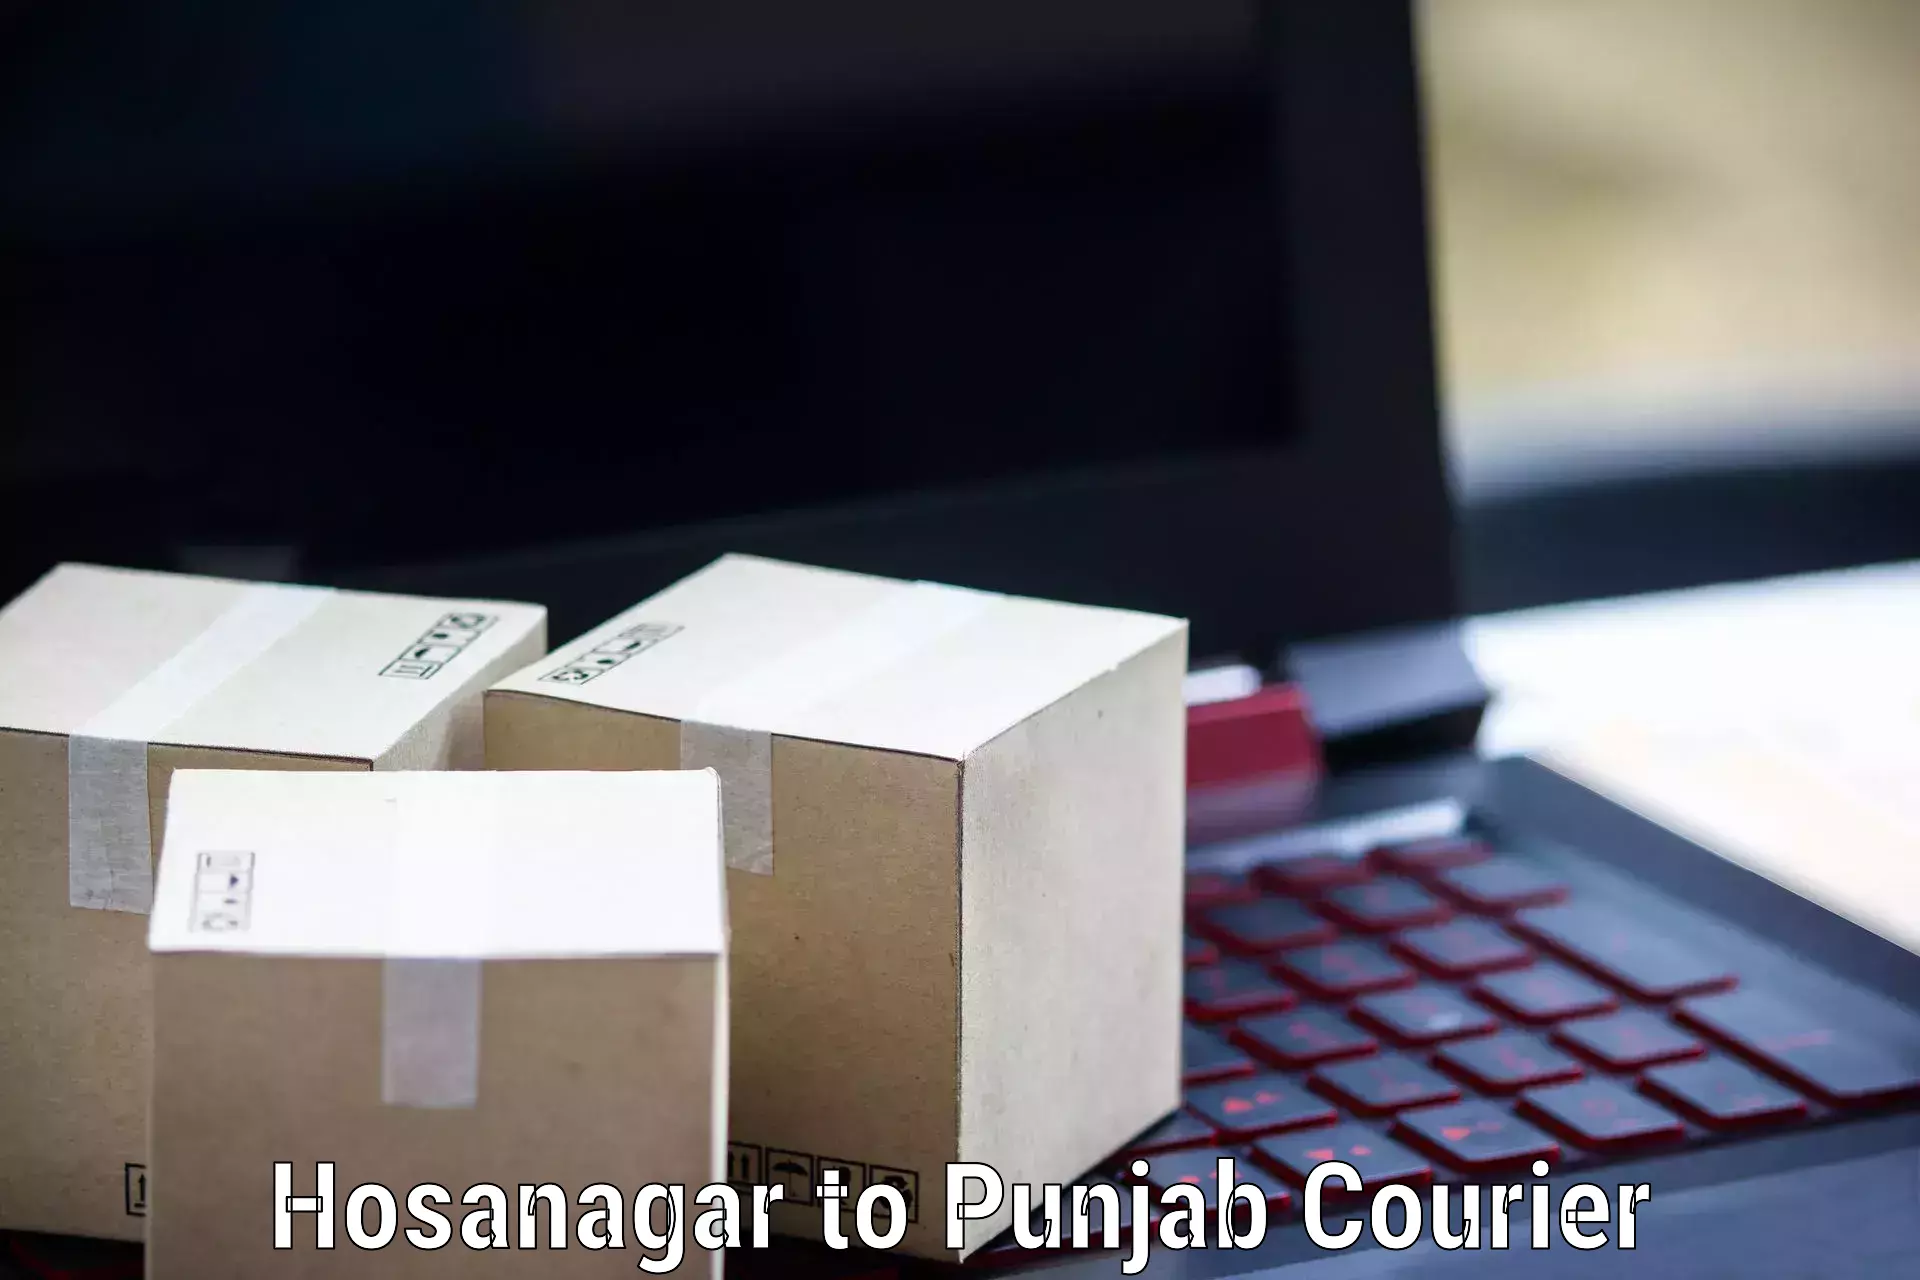 State-of-the-art courier technology Hosanagar to Kotkapura